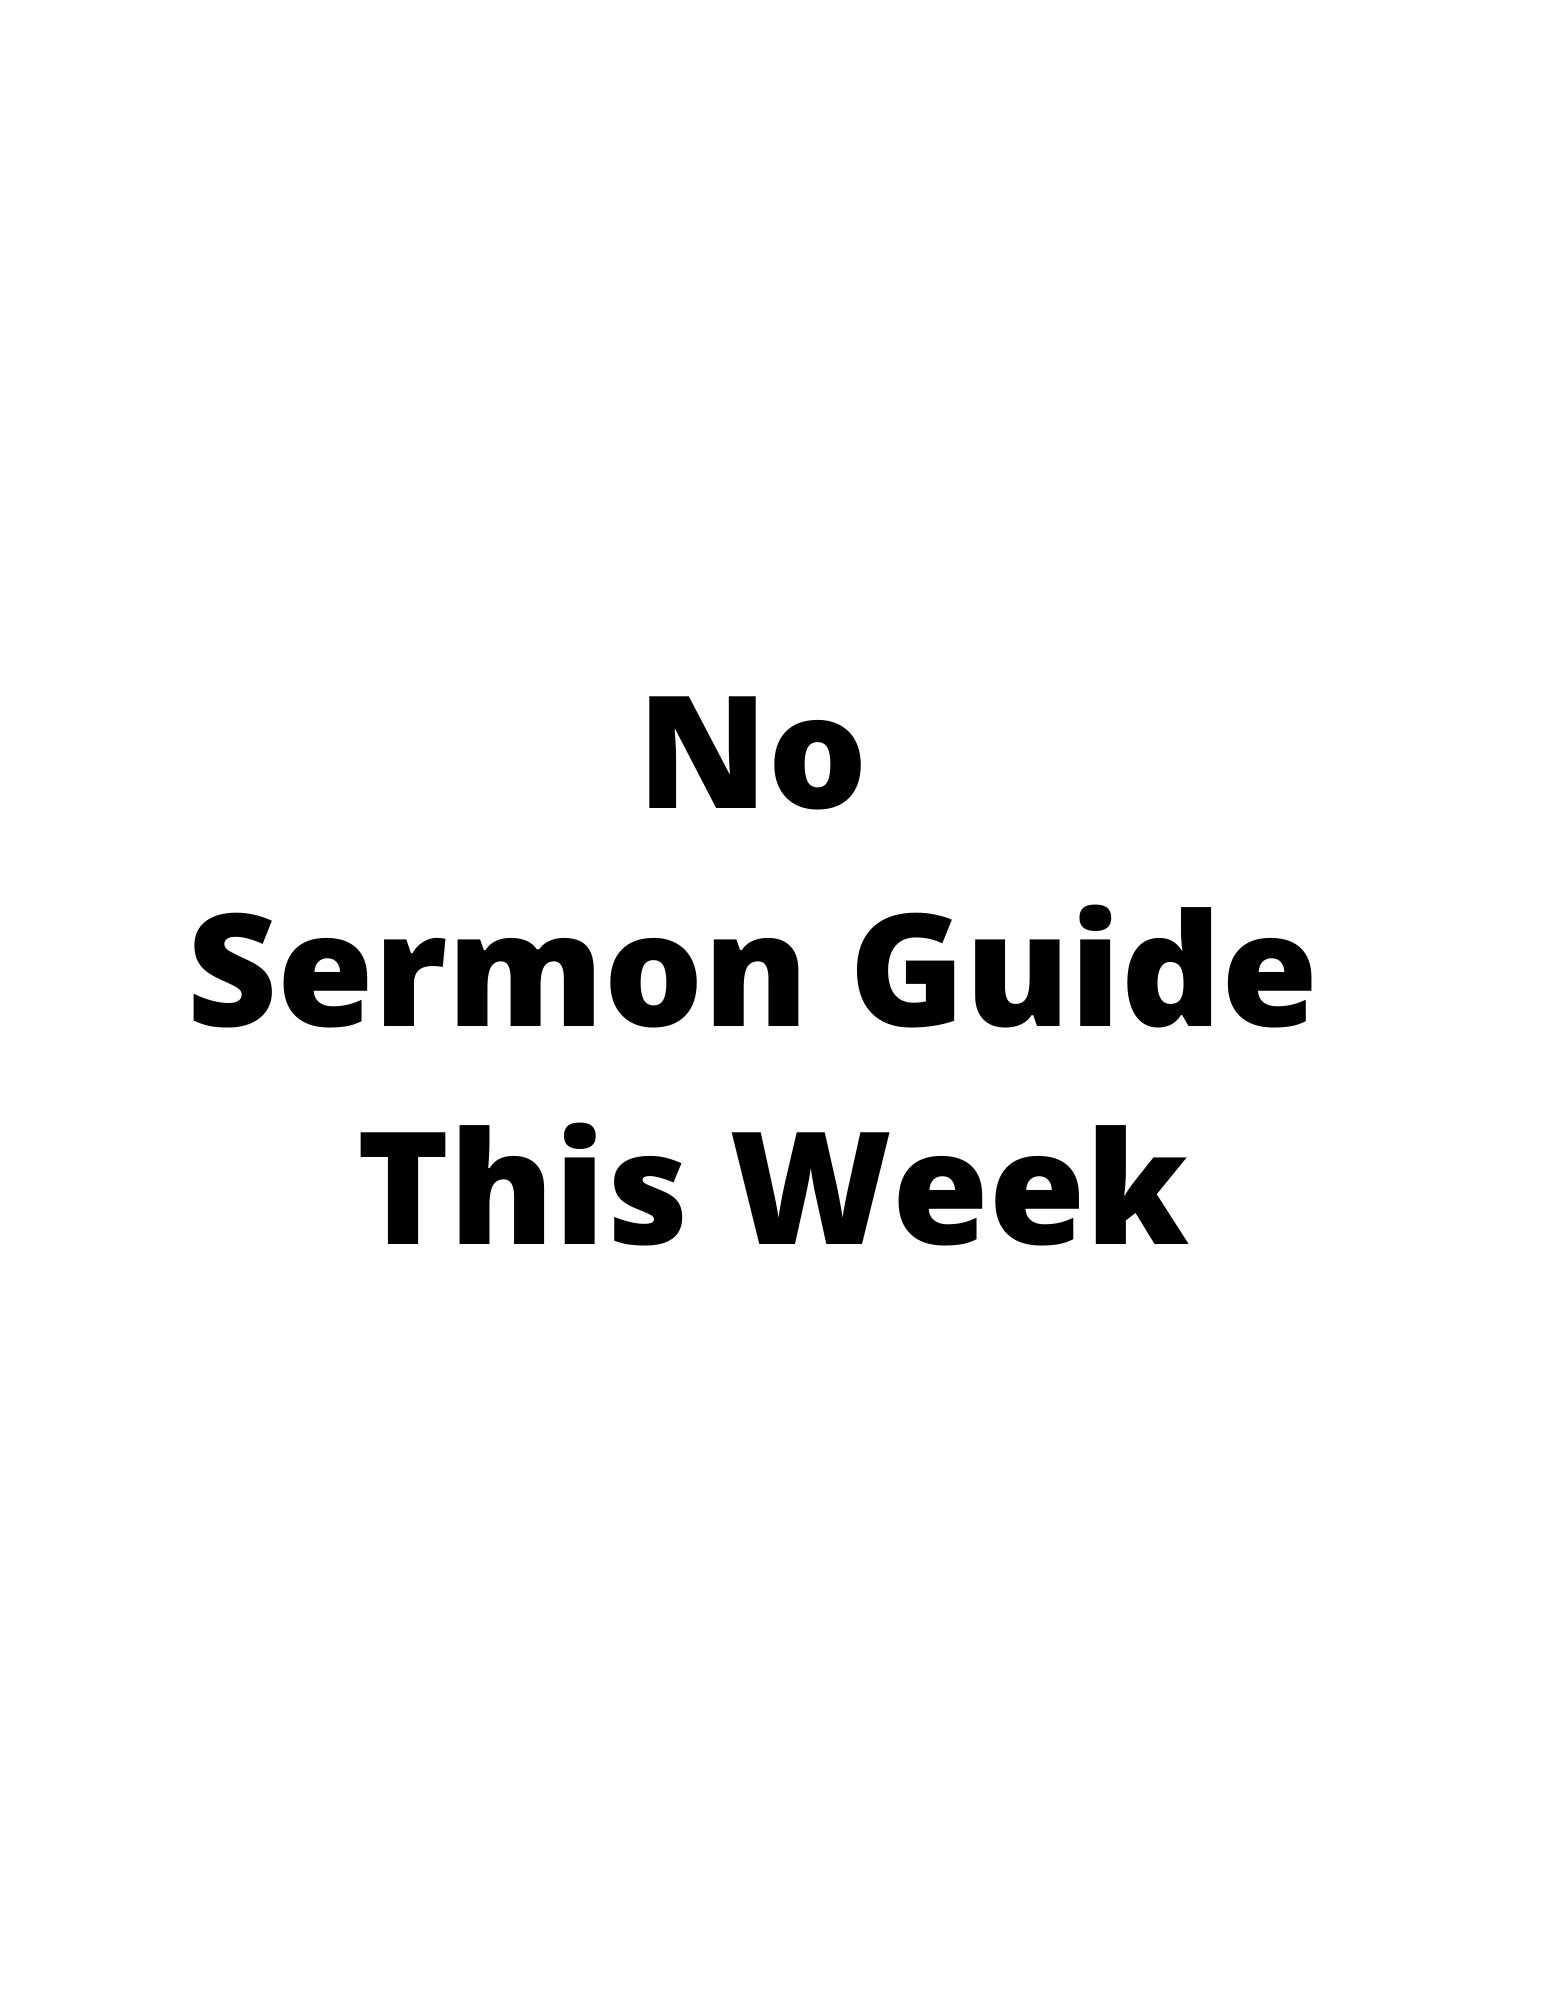 No Sermon Guide This Week